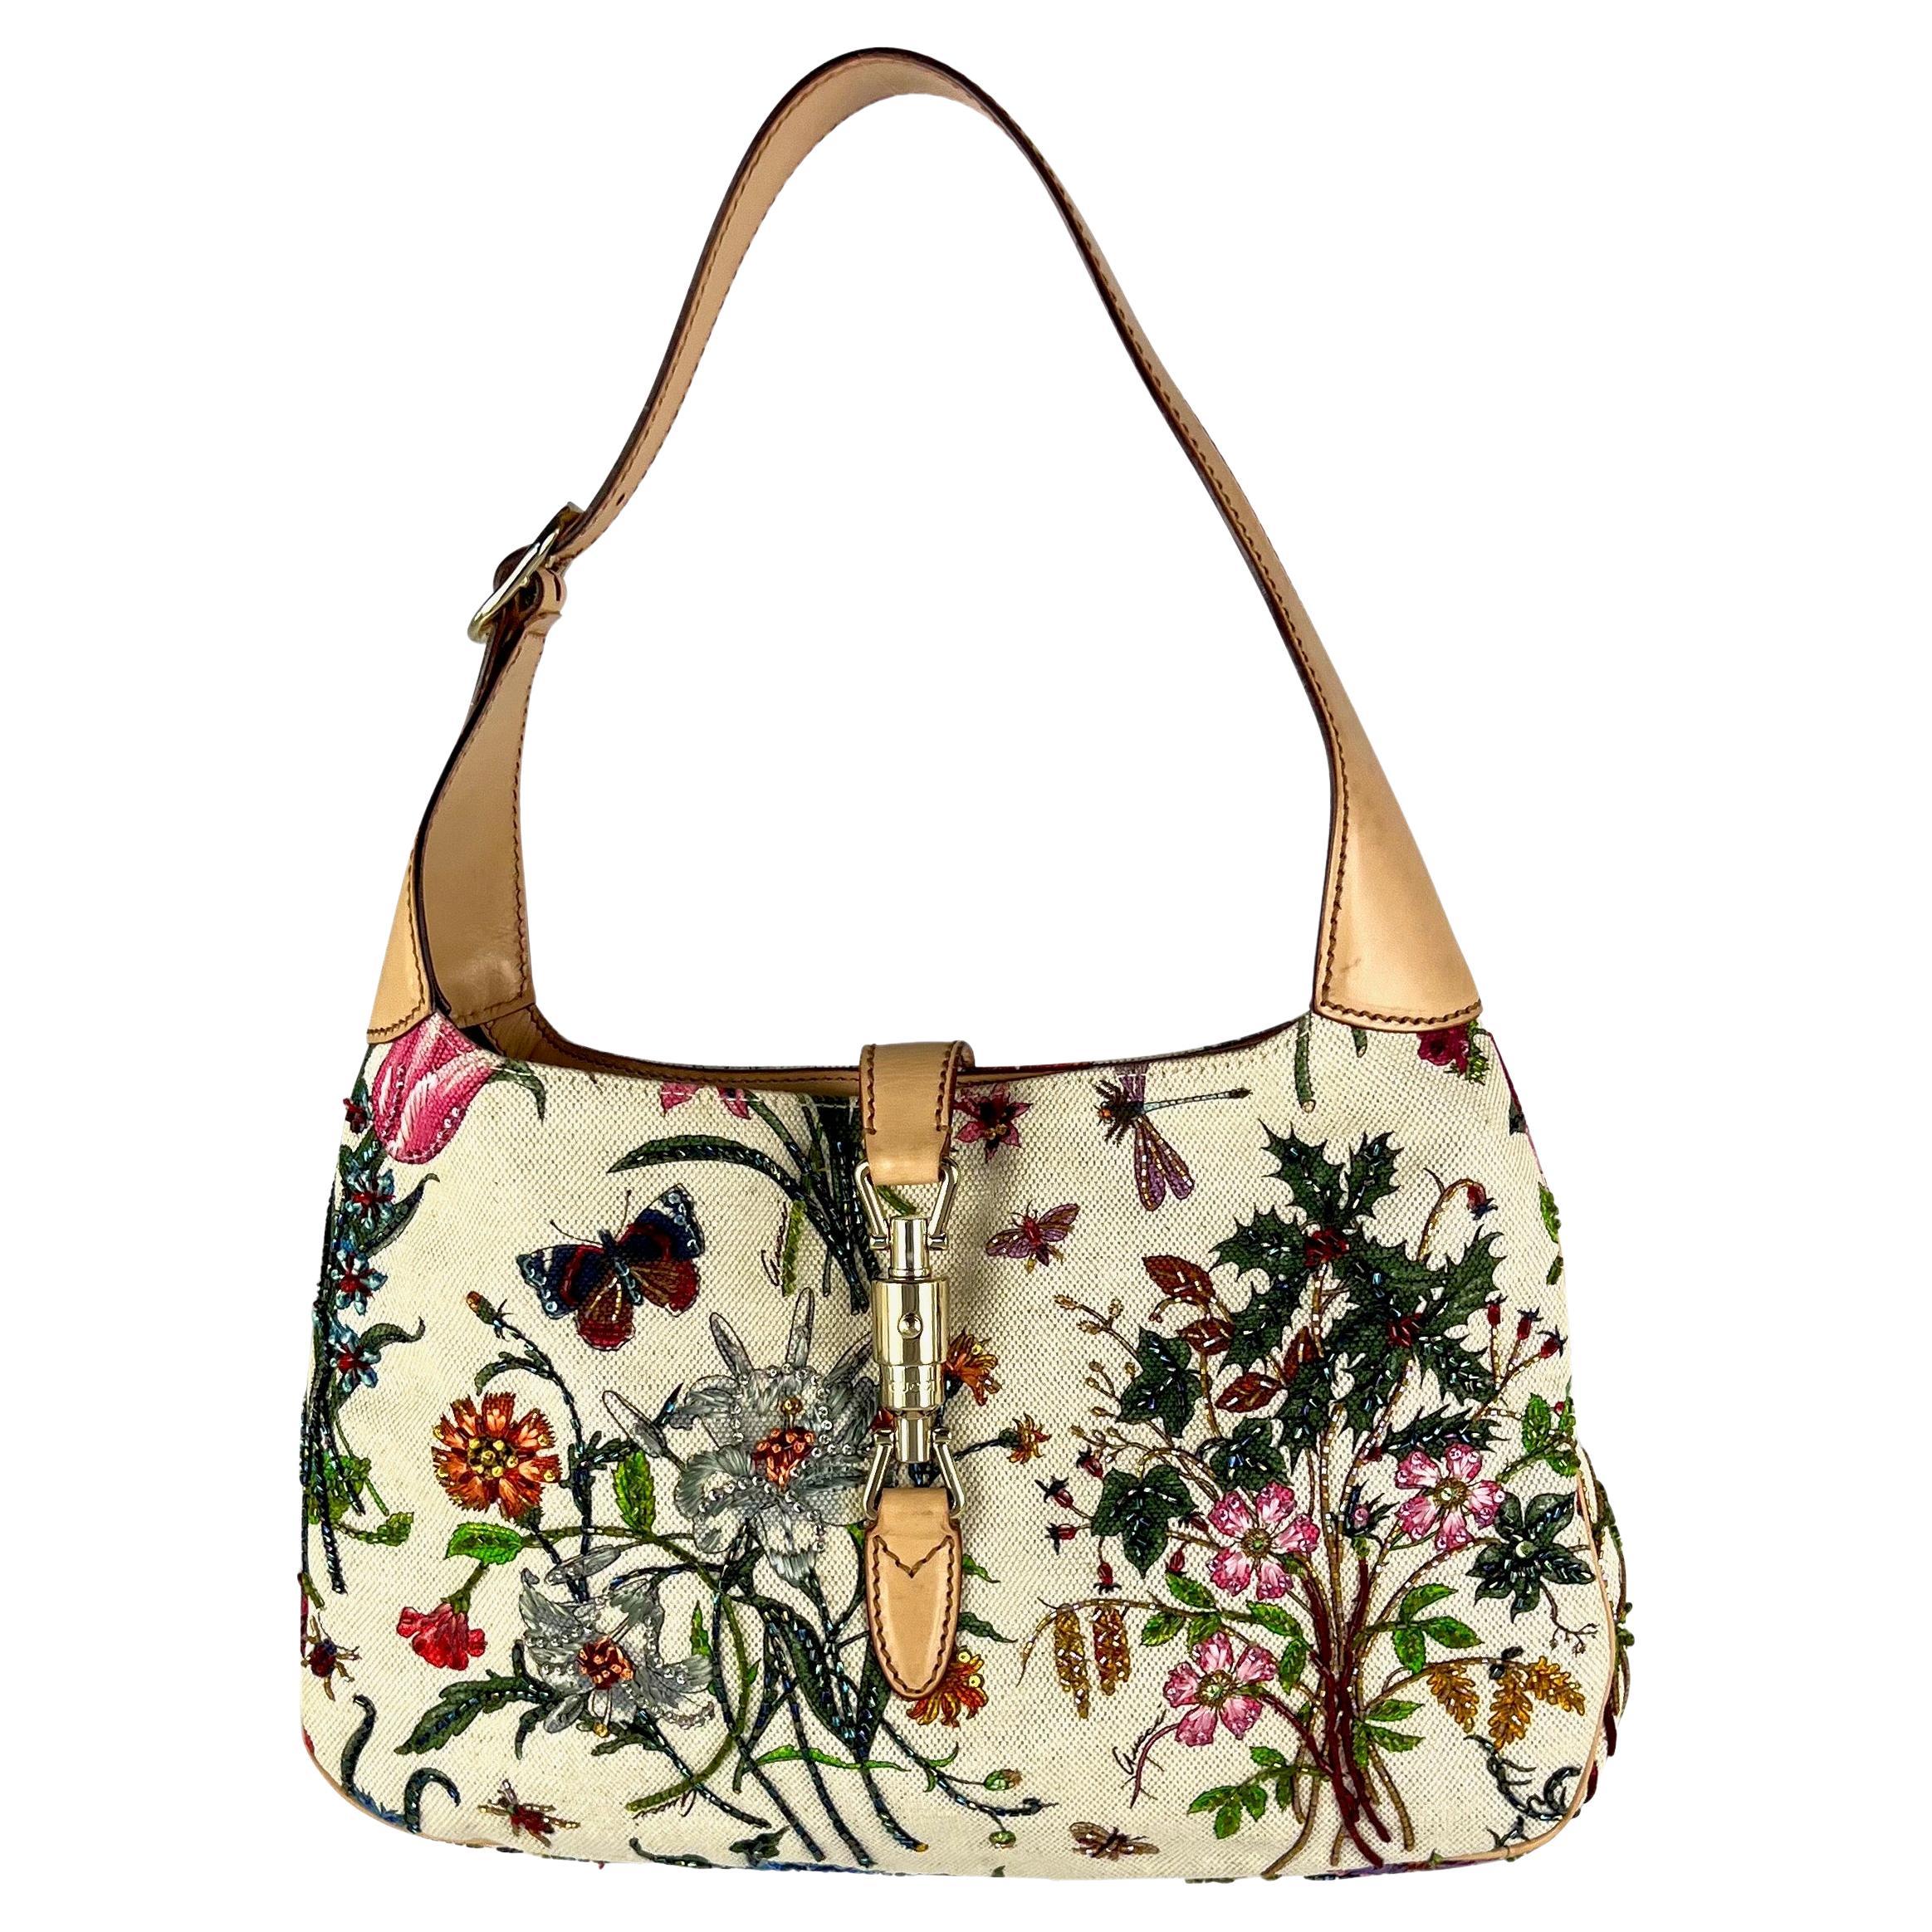 S/S 2005 Gucci Beaded Embroidered Sequin Flora Medium Jackie Shoulder Bag